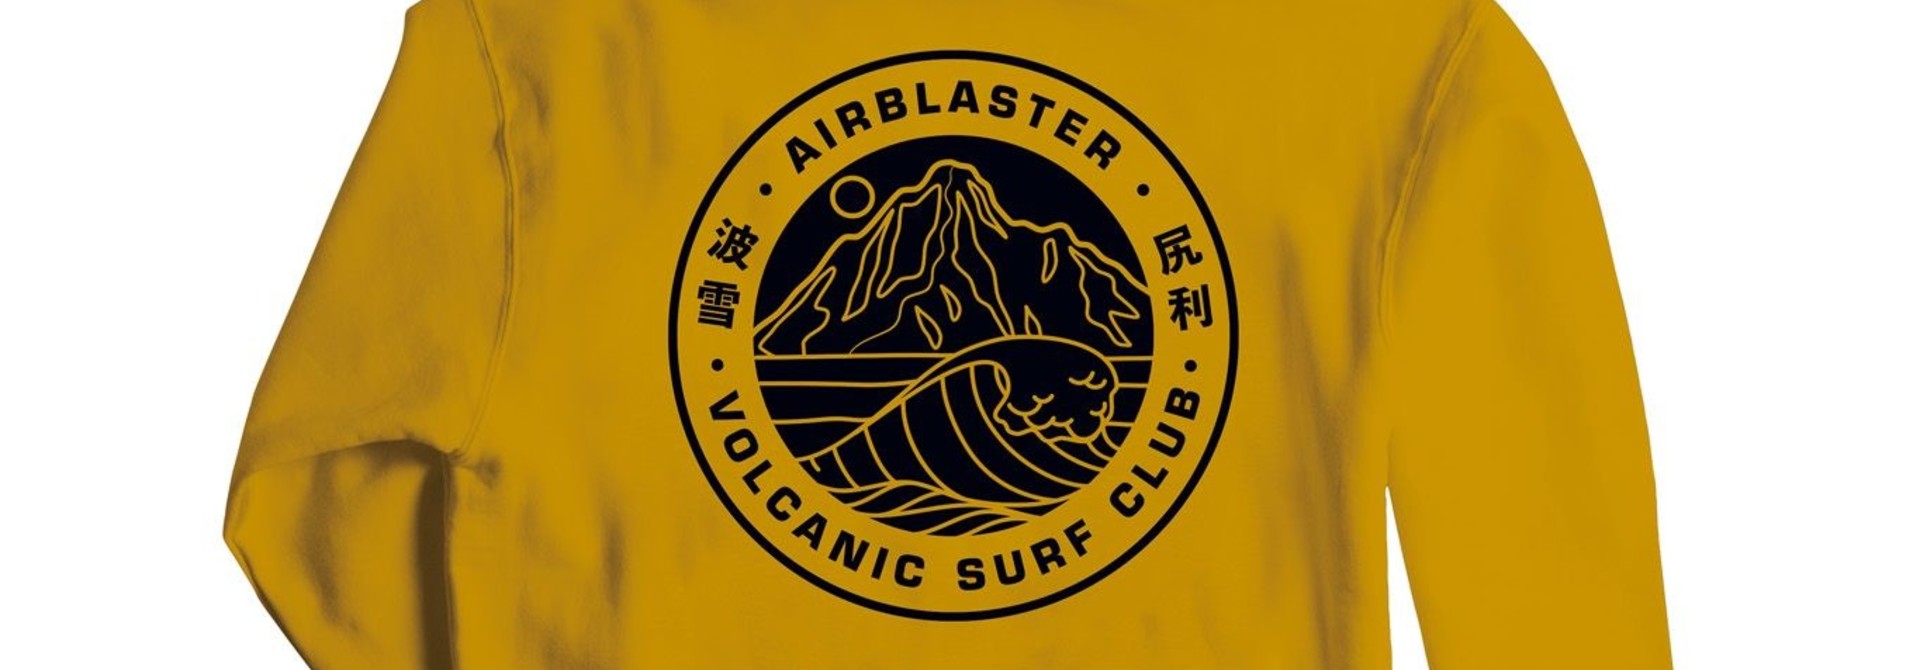 Volcanic Surf Club Hoody